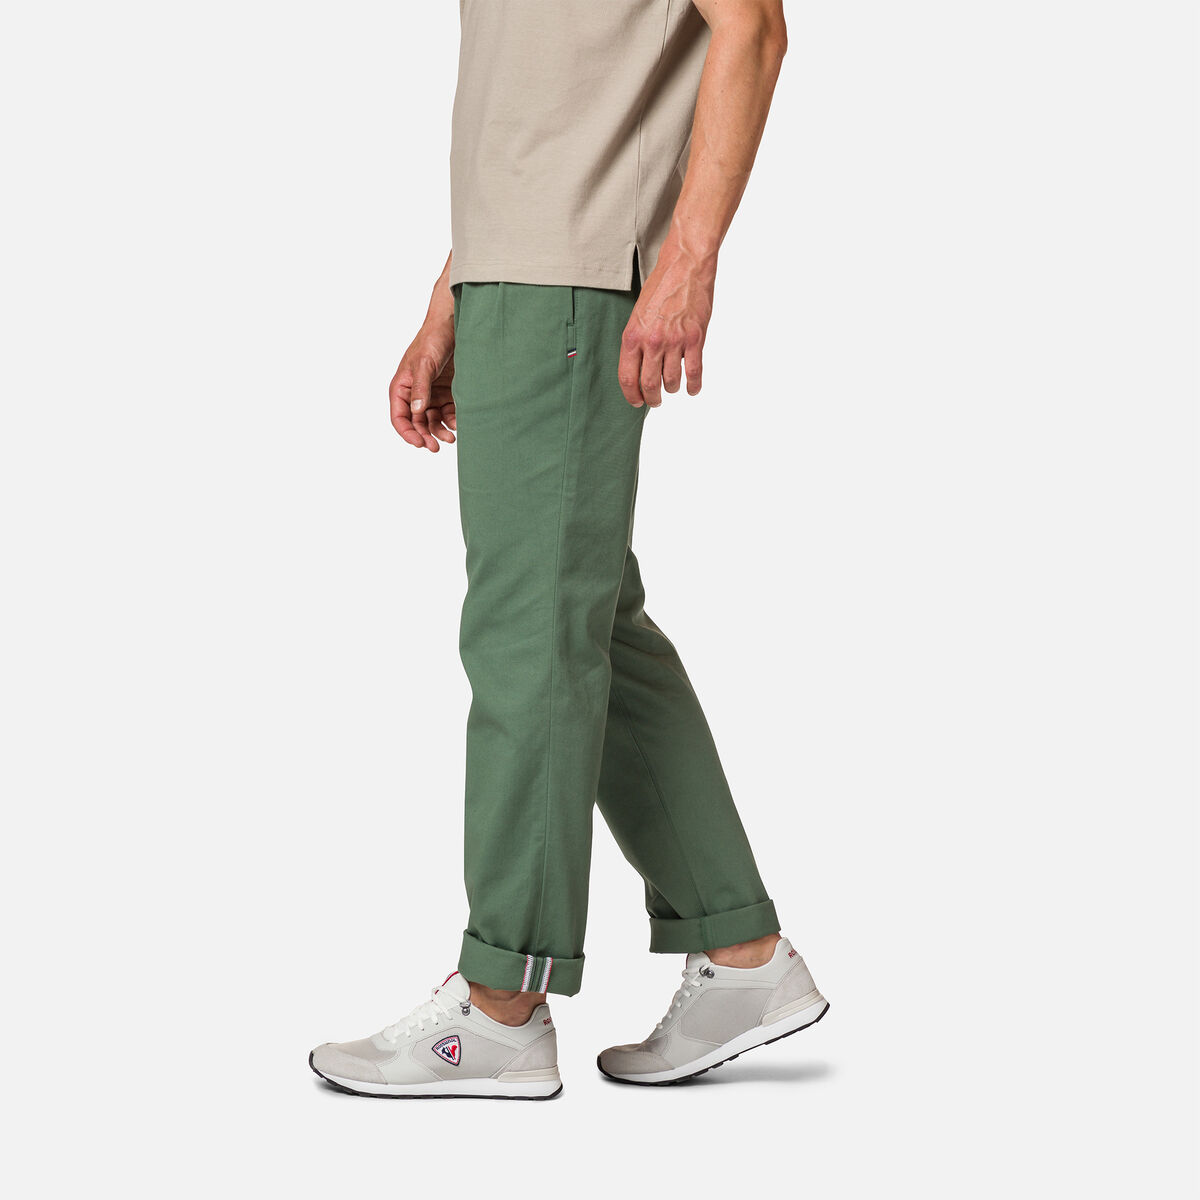 Men's organic cotton chino pants